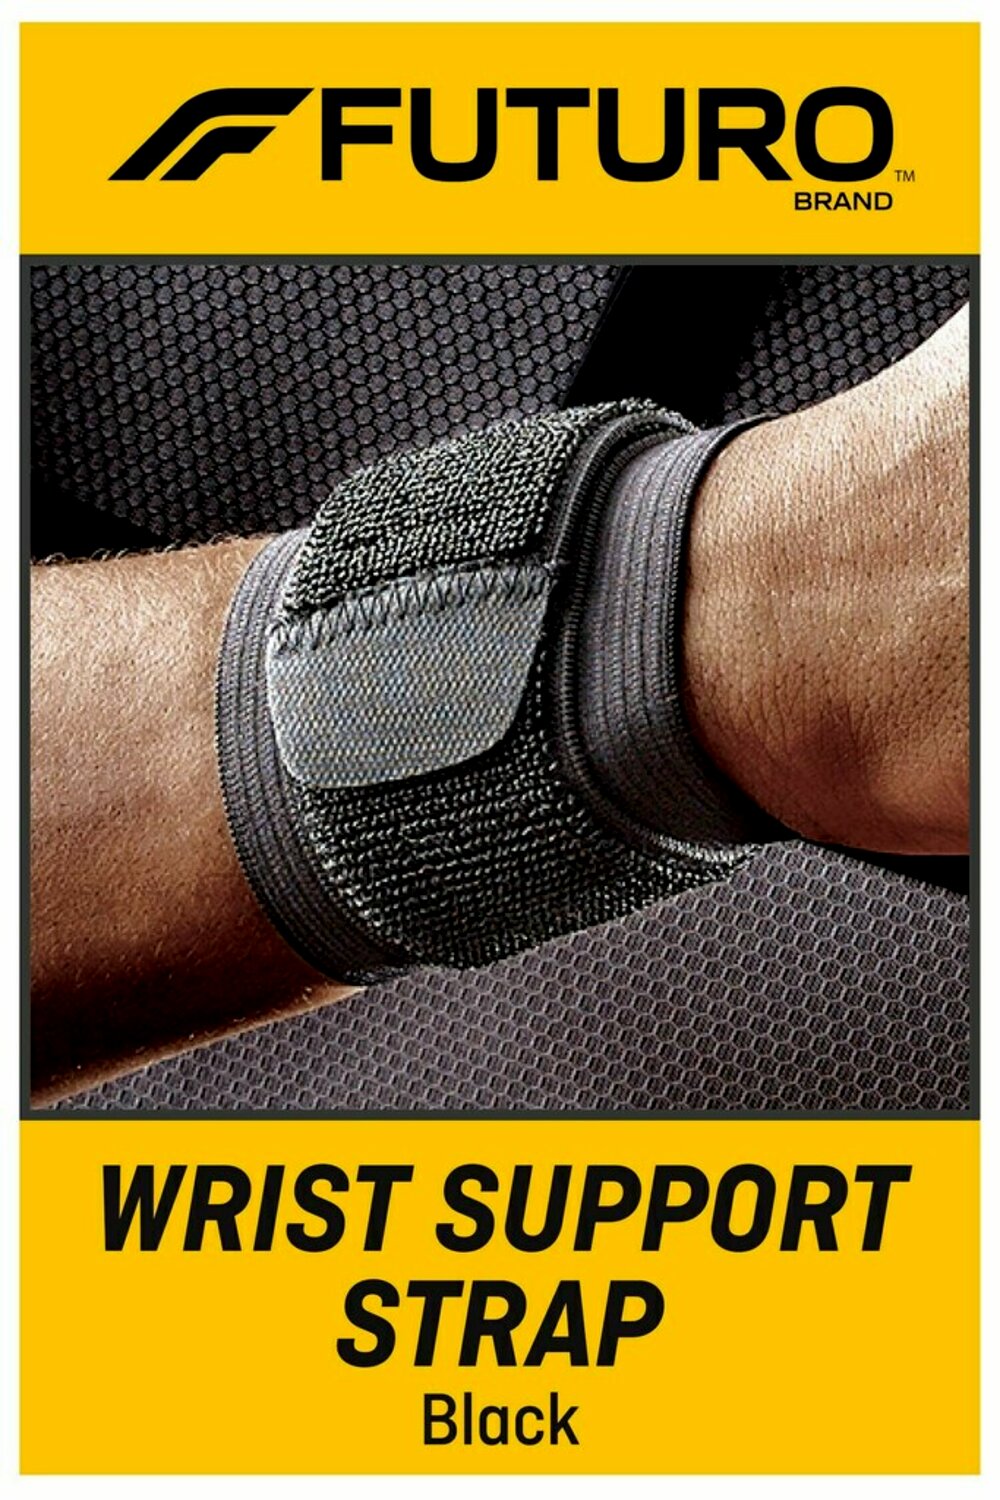 00051131201392  FUTURO Wrist Support Strap, 46378ENR, Adjustable